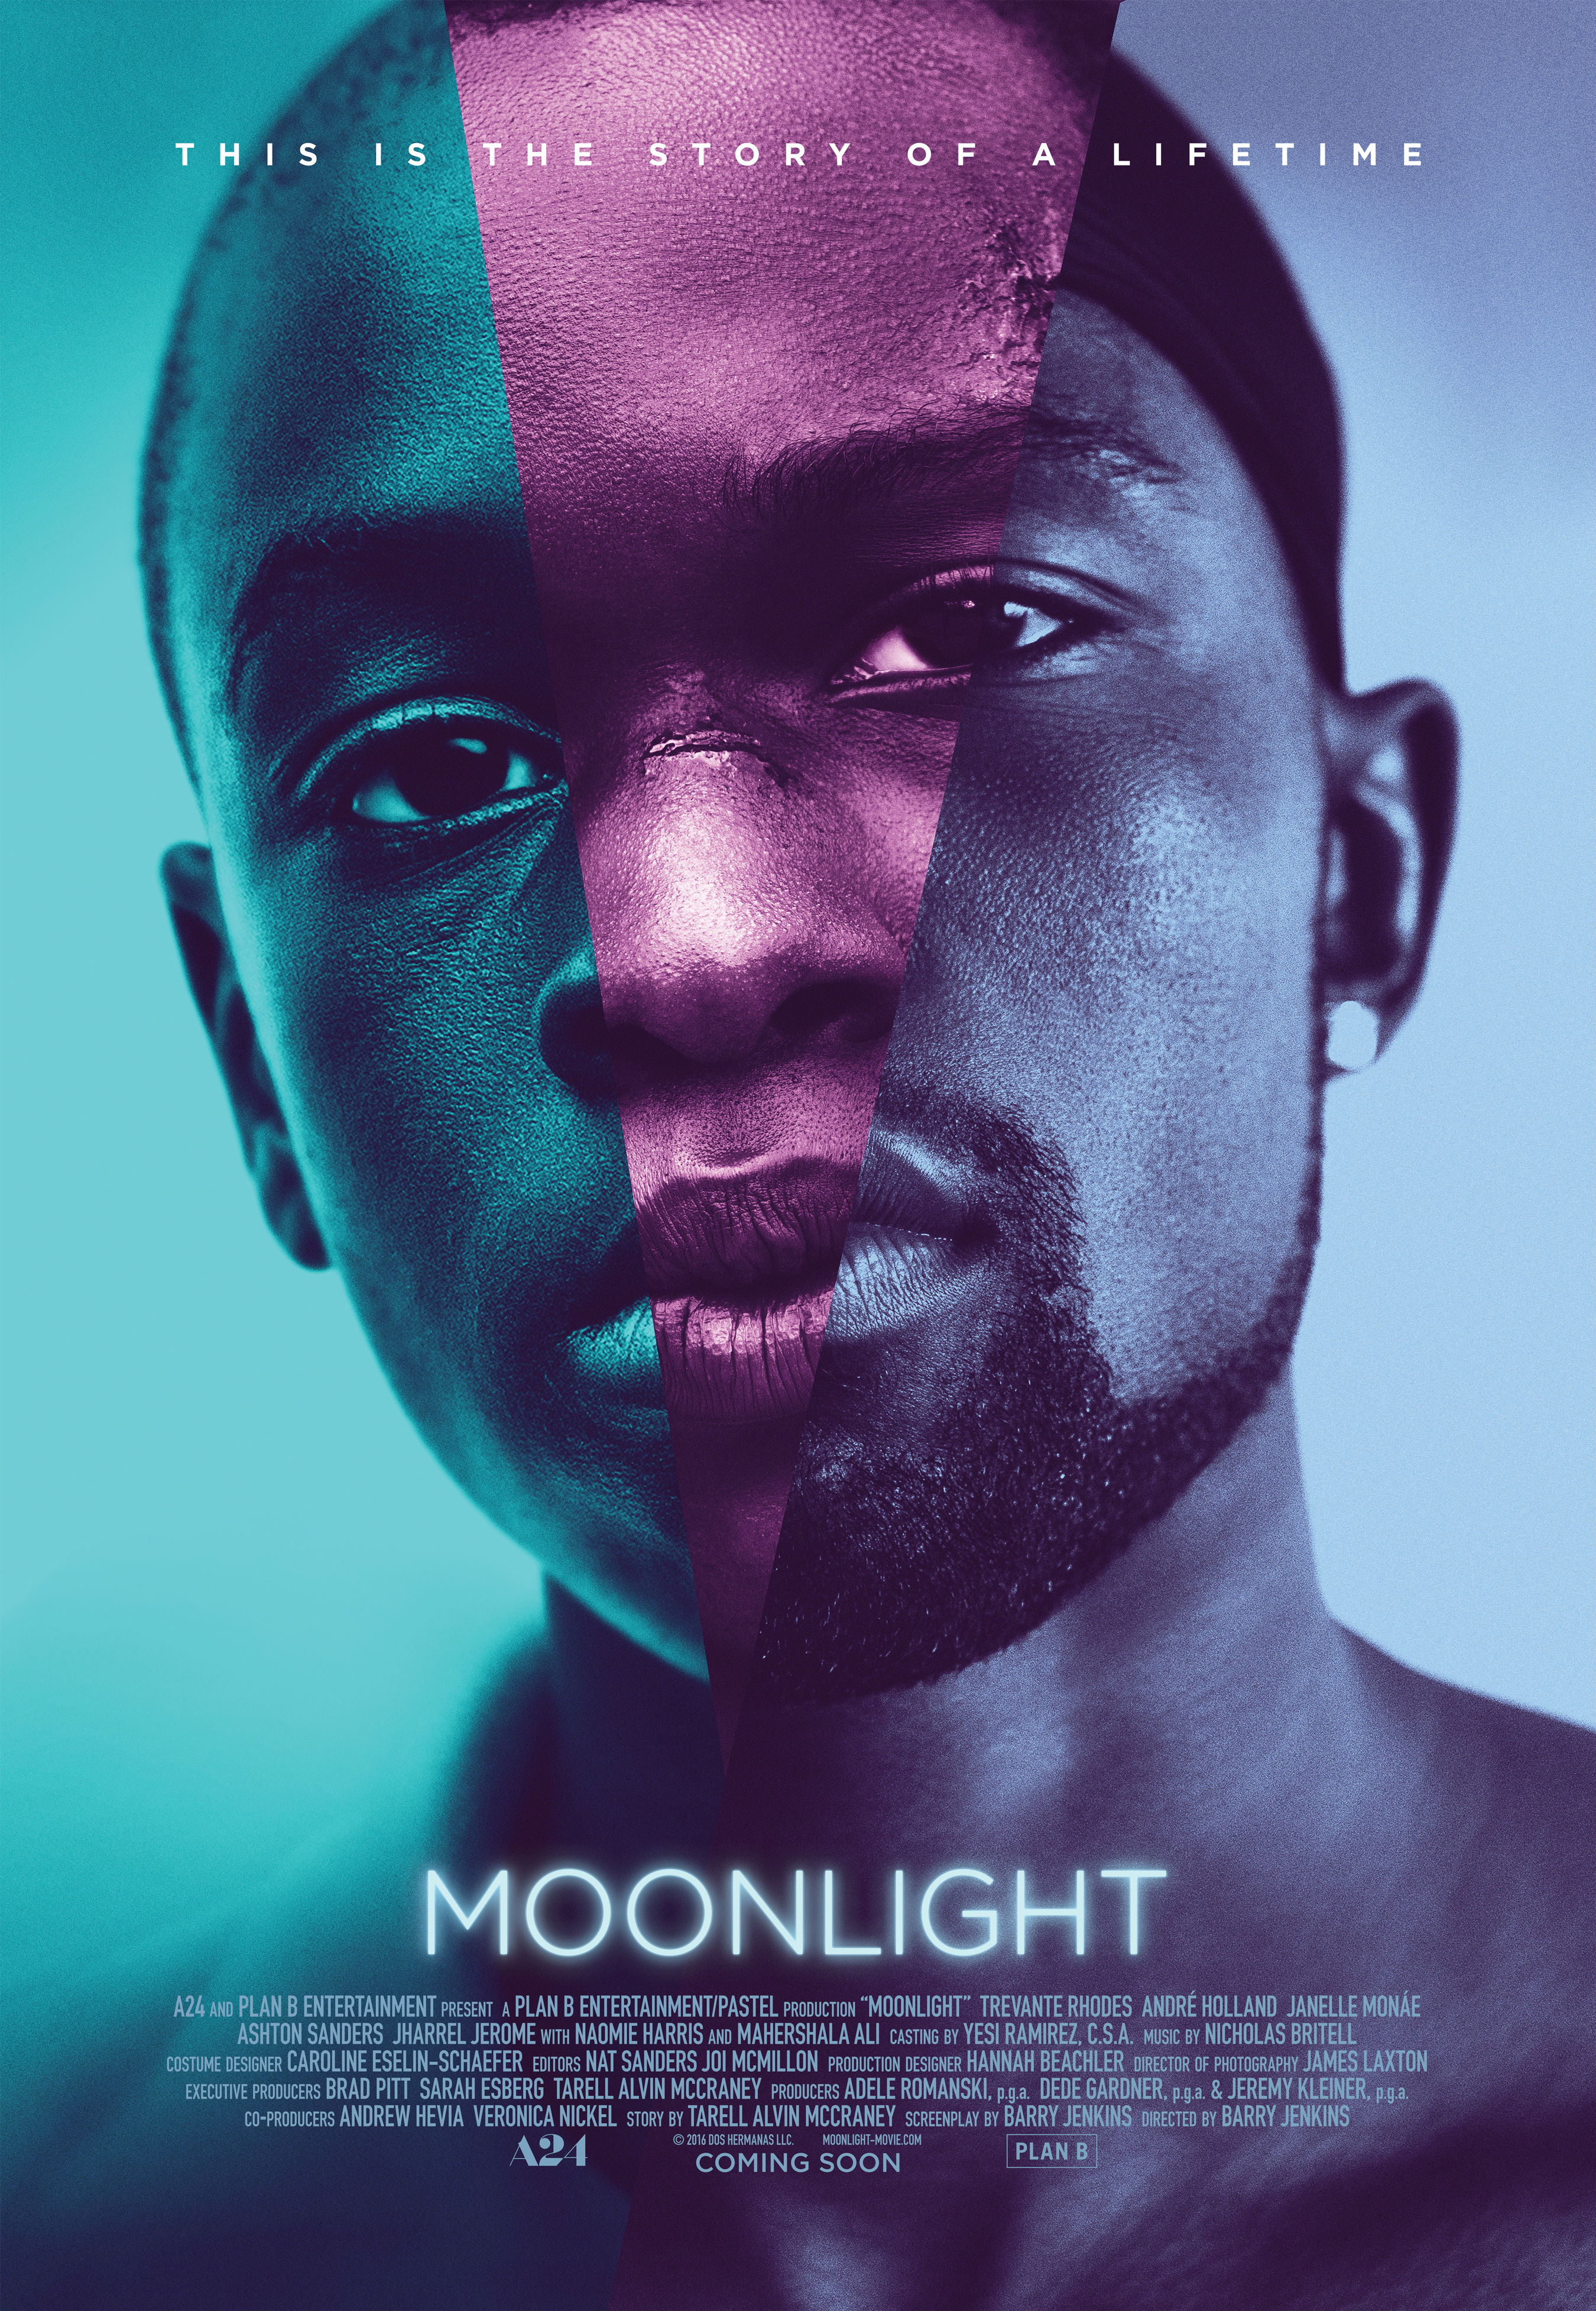 ‘Moonlight’ rewrites masculinity